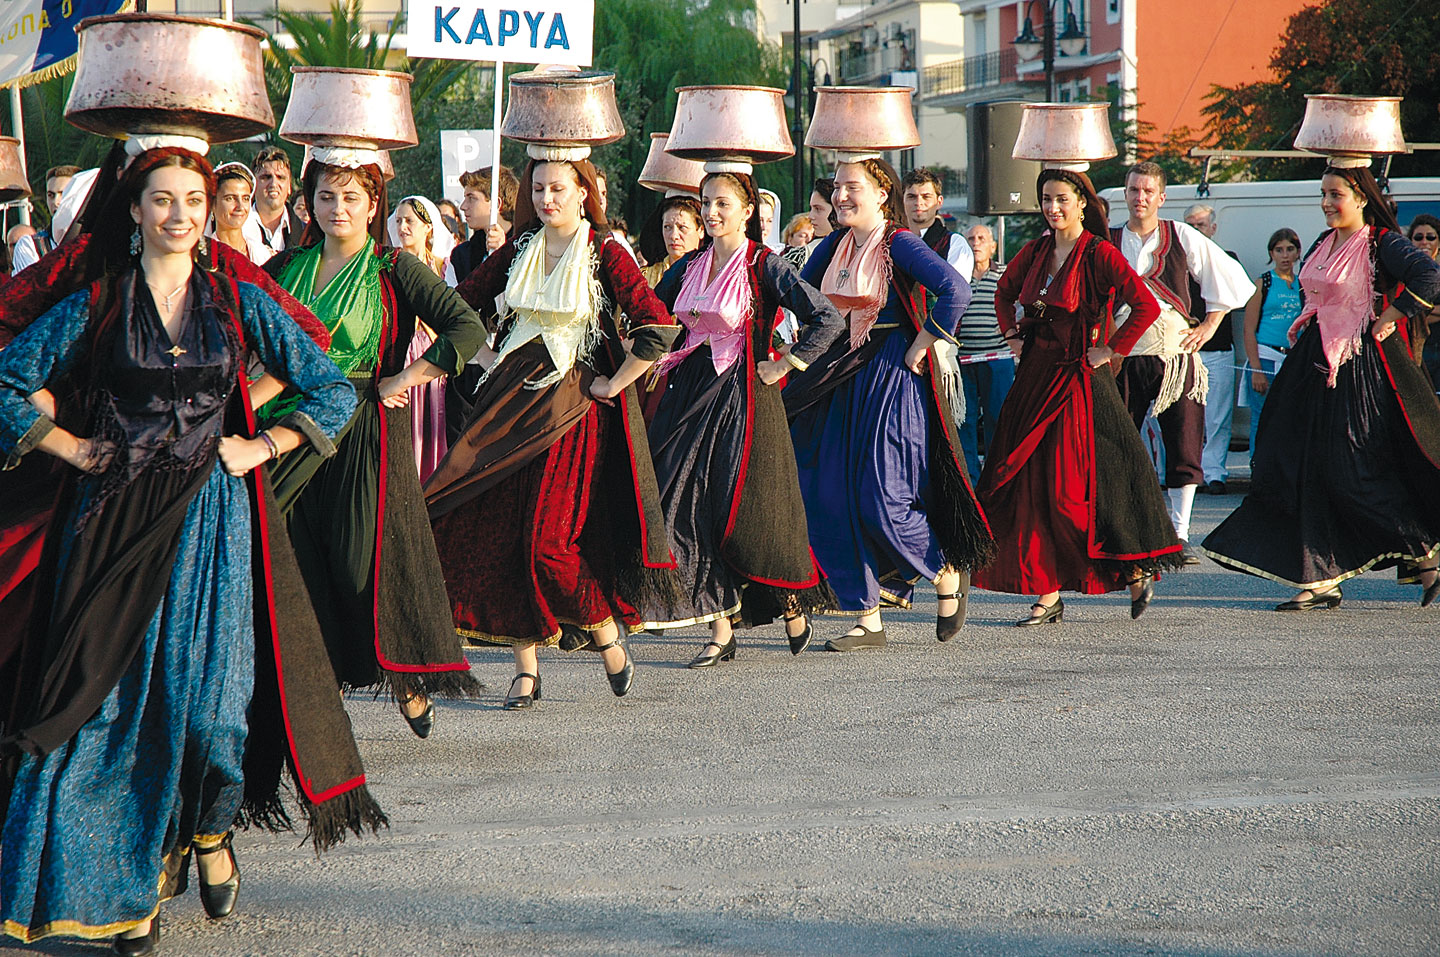 Dancing group from Karya | International Folklore Festival | Lefkada Slow Guide